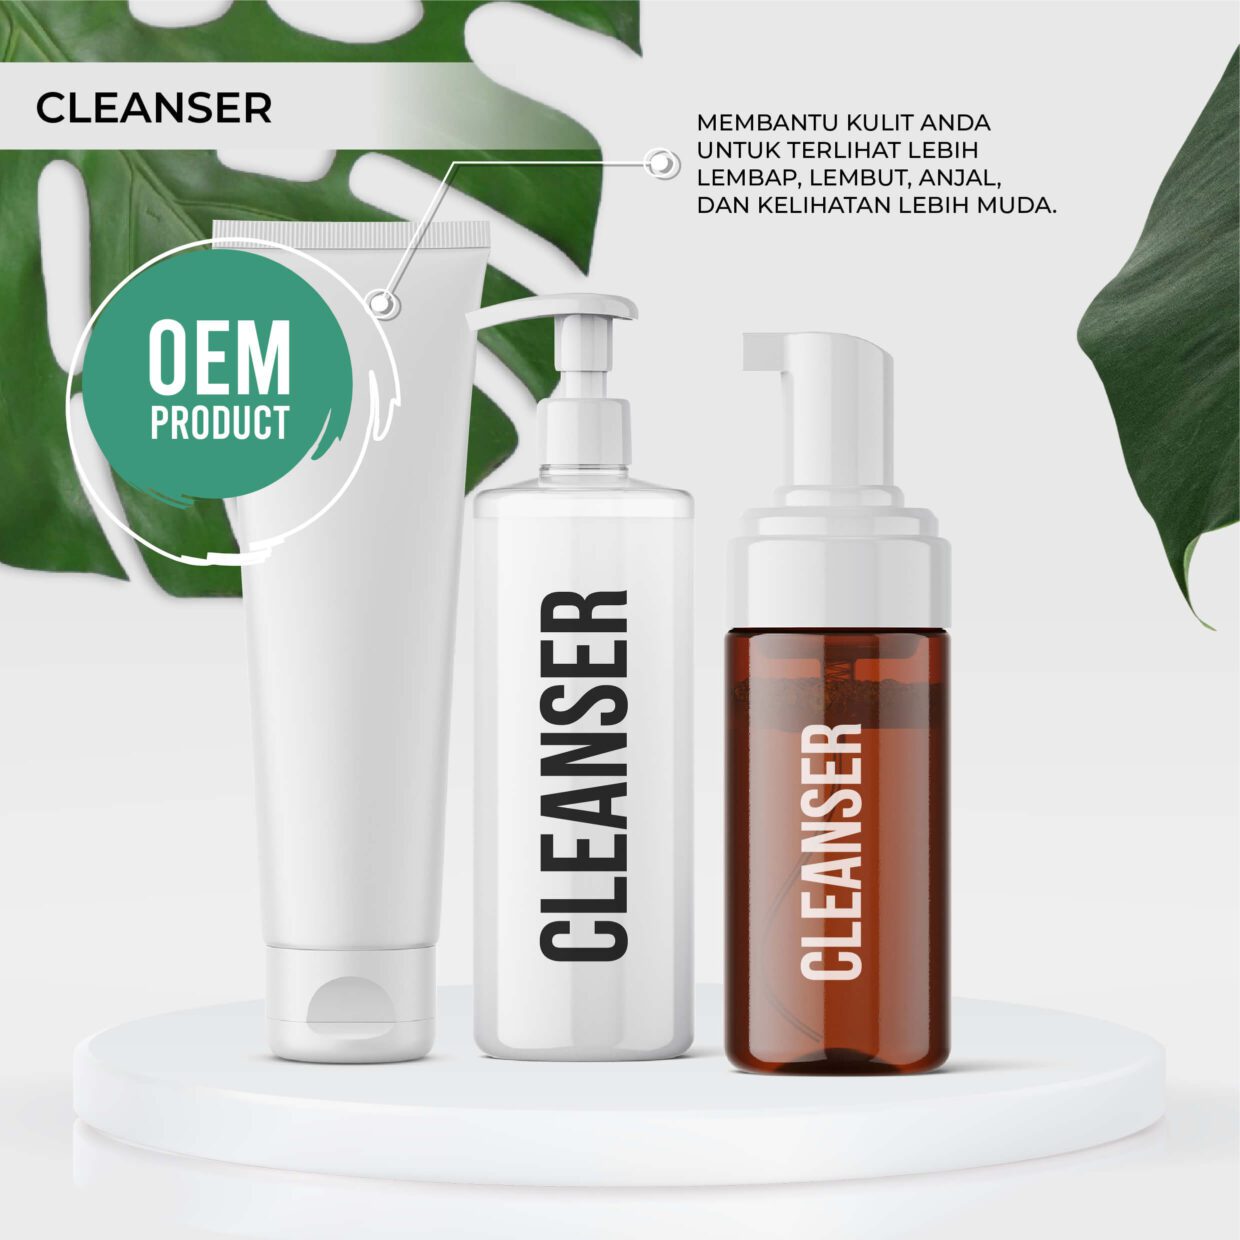 cleanser - produk jenama sendiri